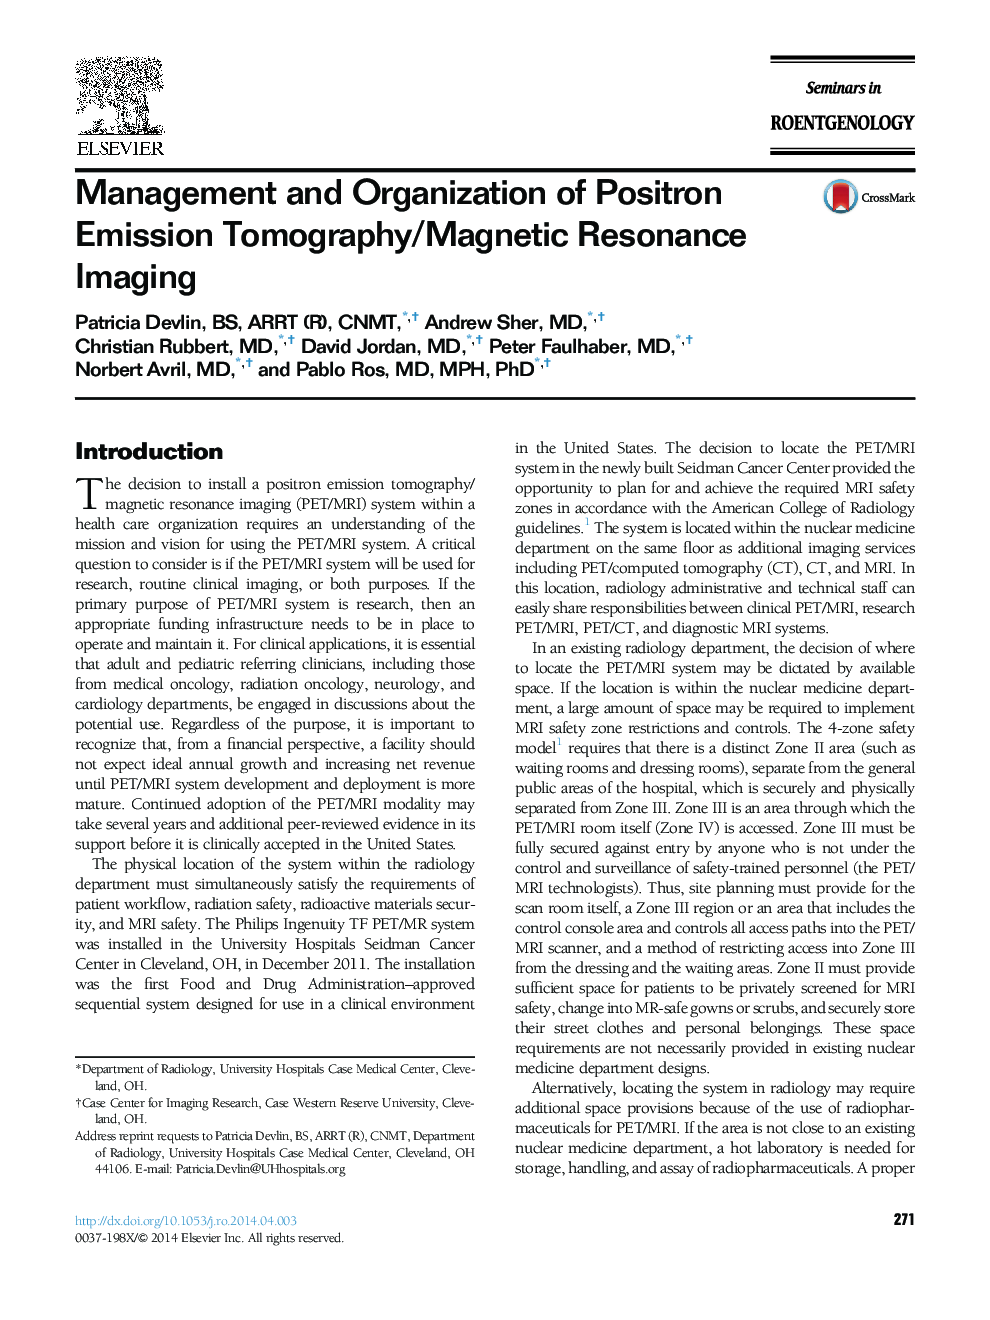 Management and Organization of Positron Emission Tomography/Magnetic Resonance Imaging